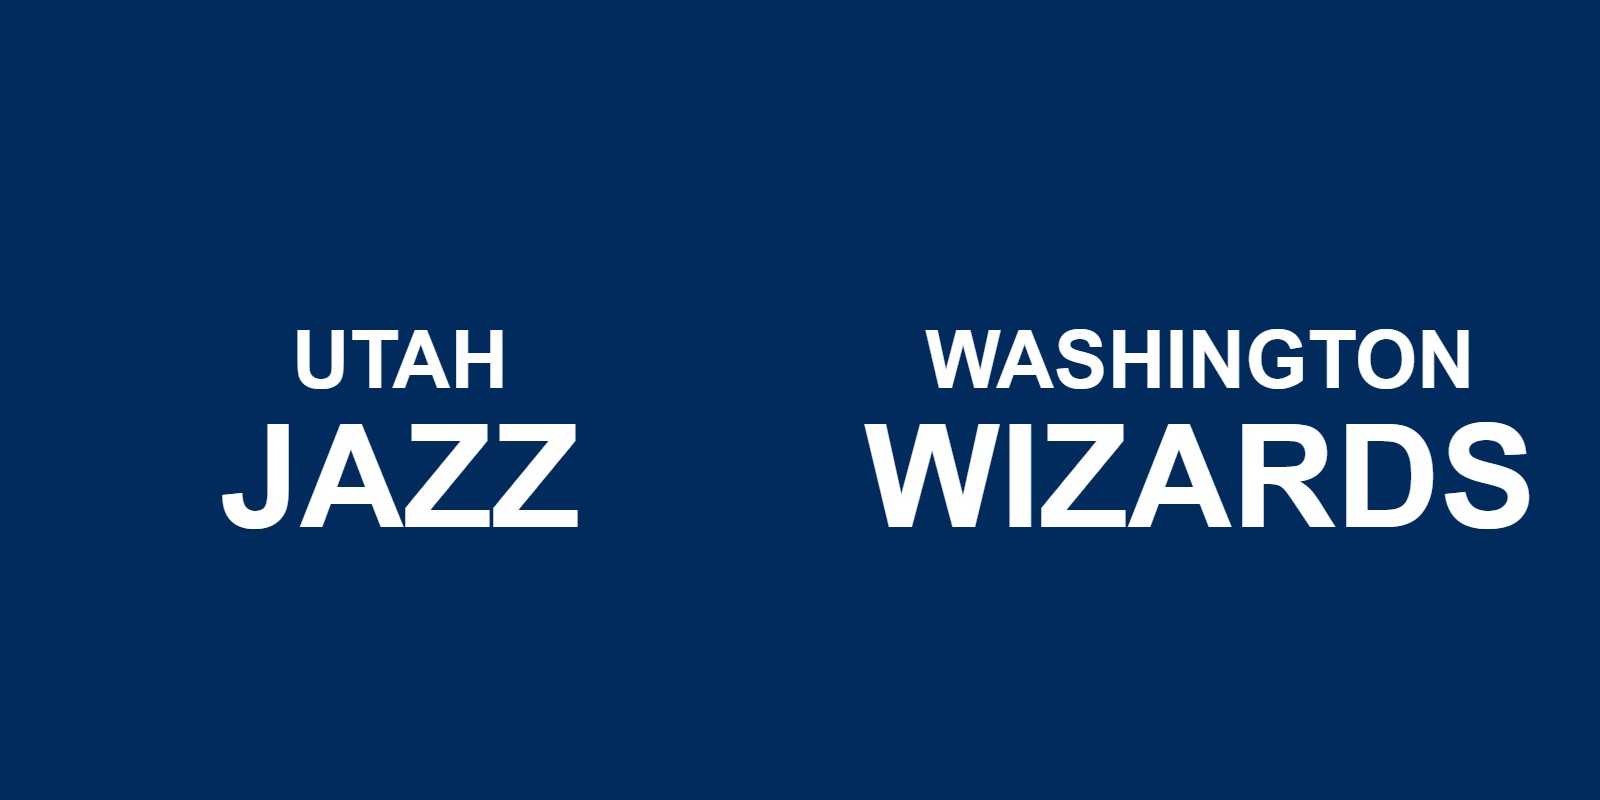 Jazz vs Wizards